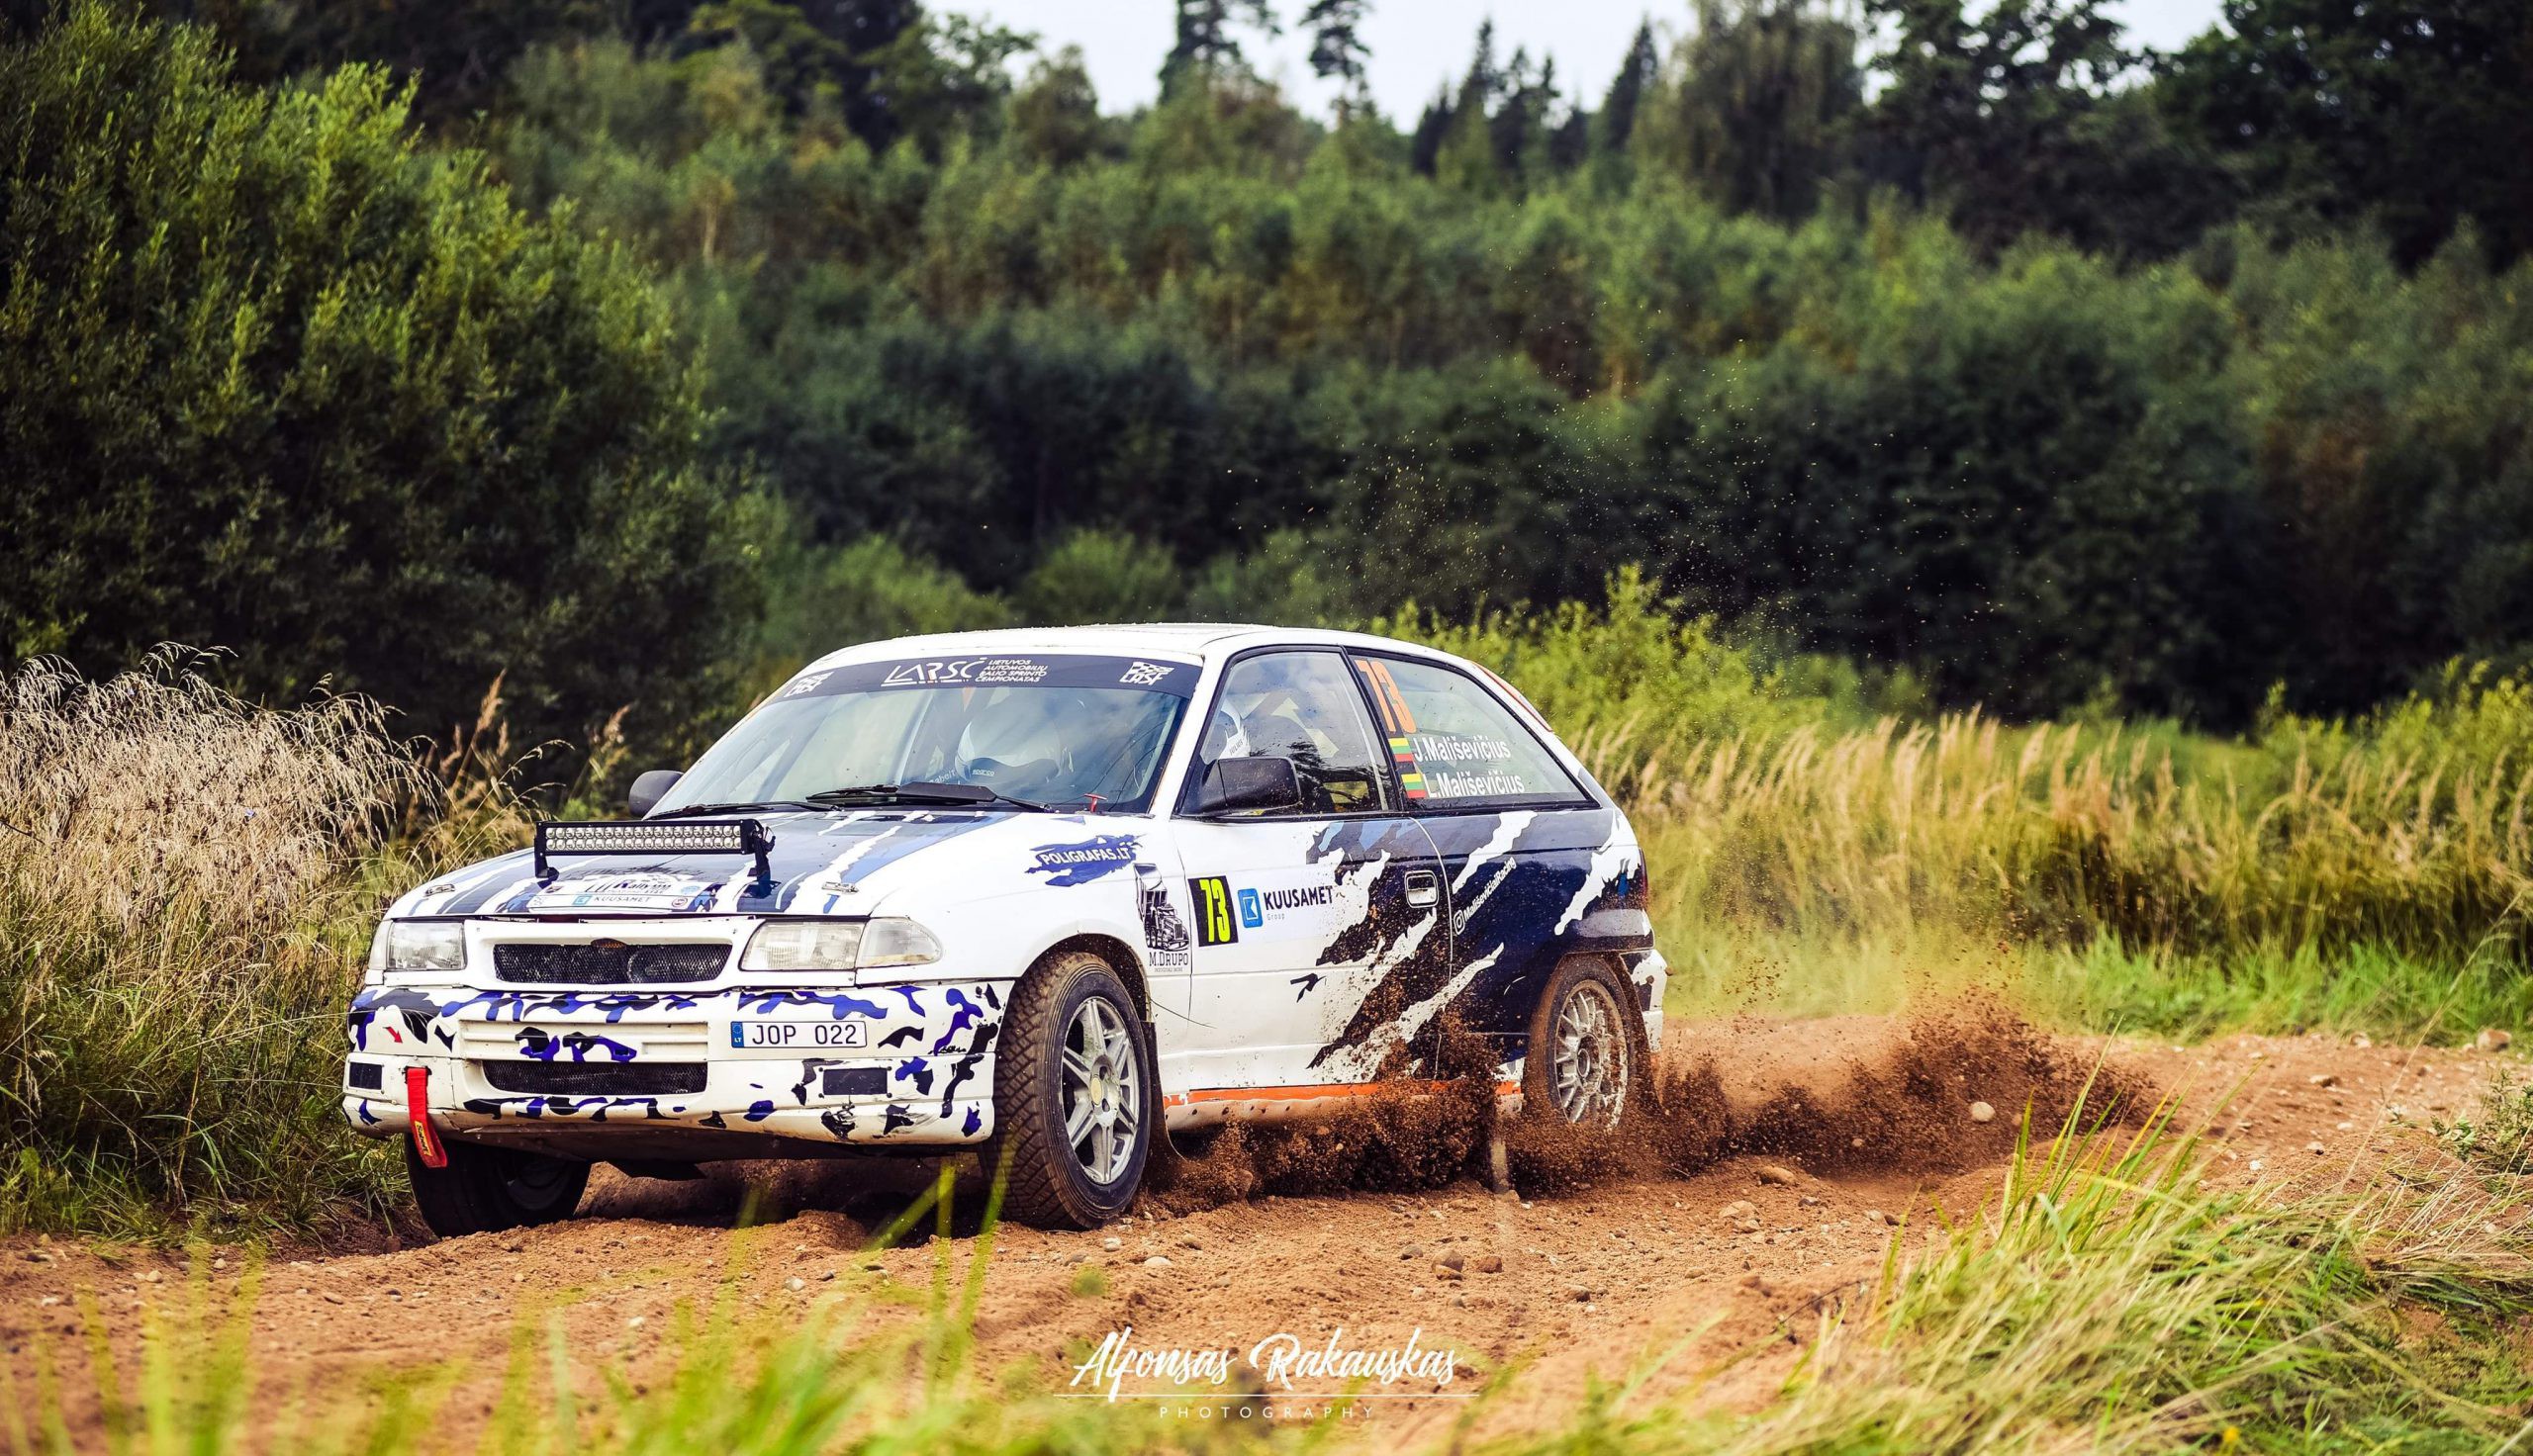 Opel Astra GSI RallyCar